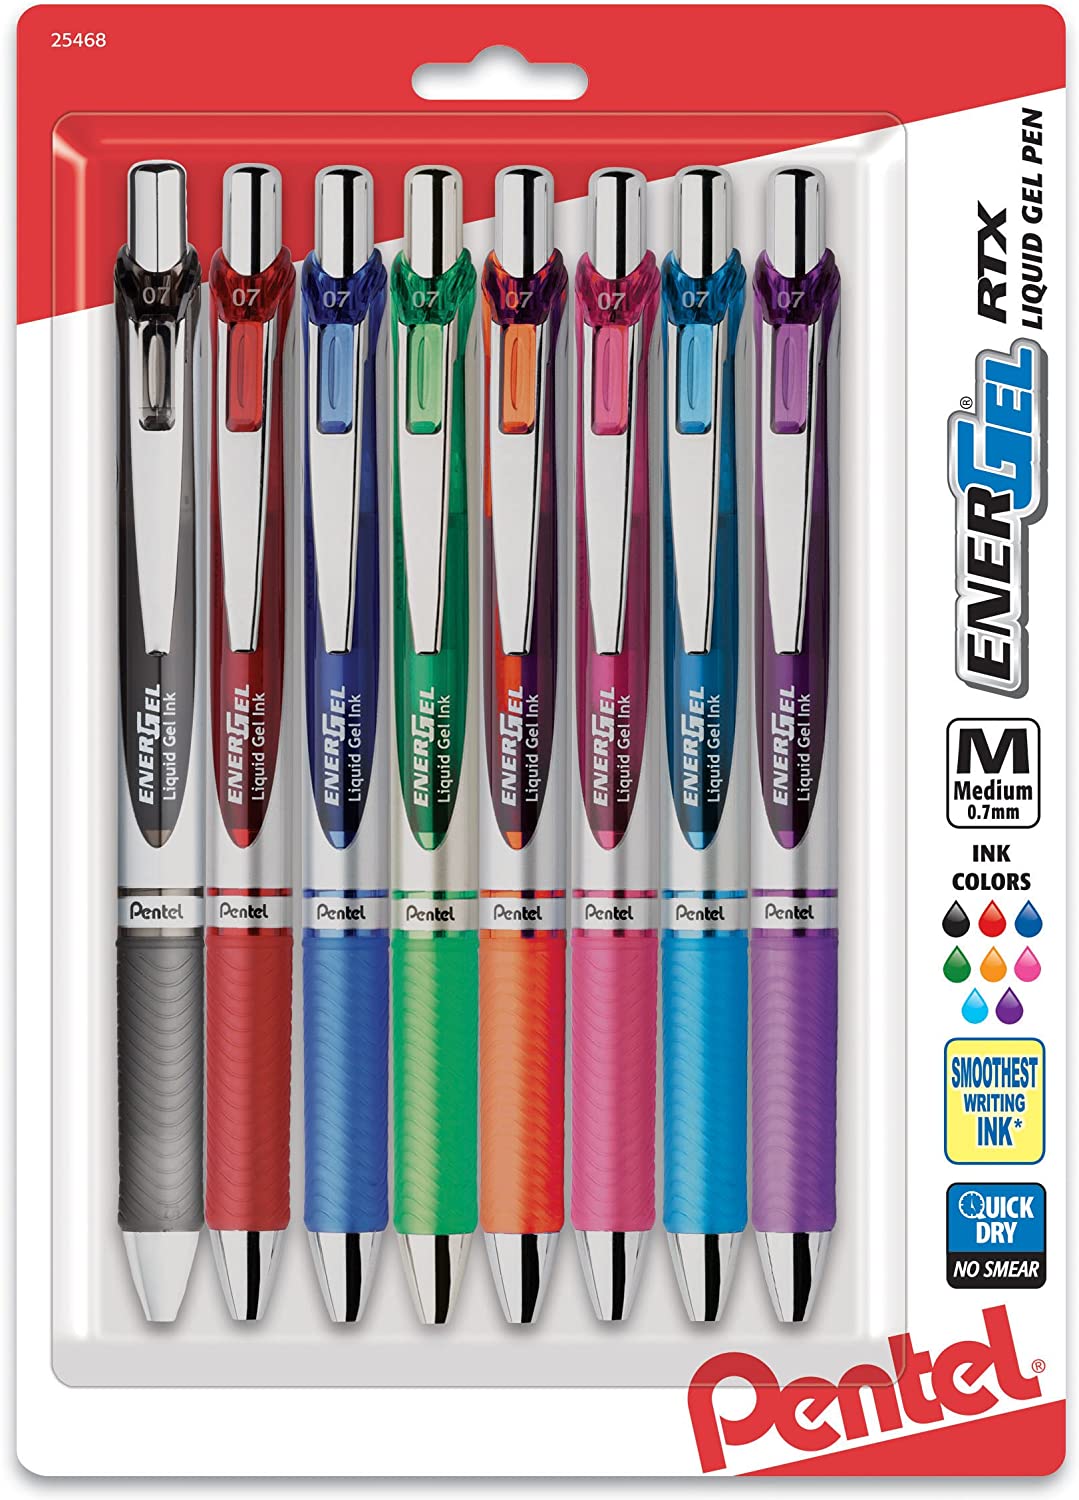 Art Supplies - Drawing & Illustration - Gel Pens - Colorful